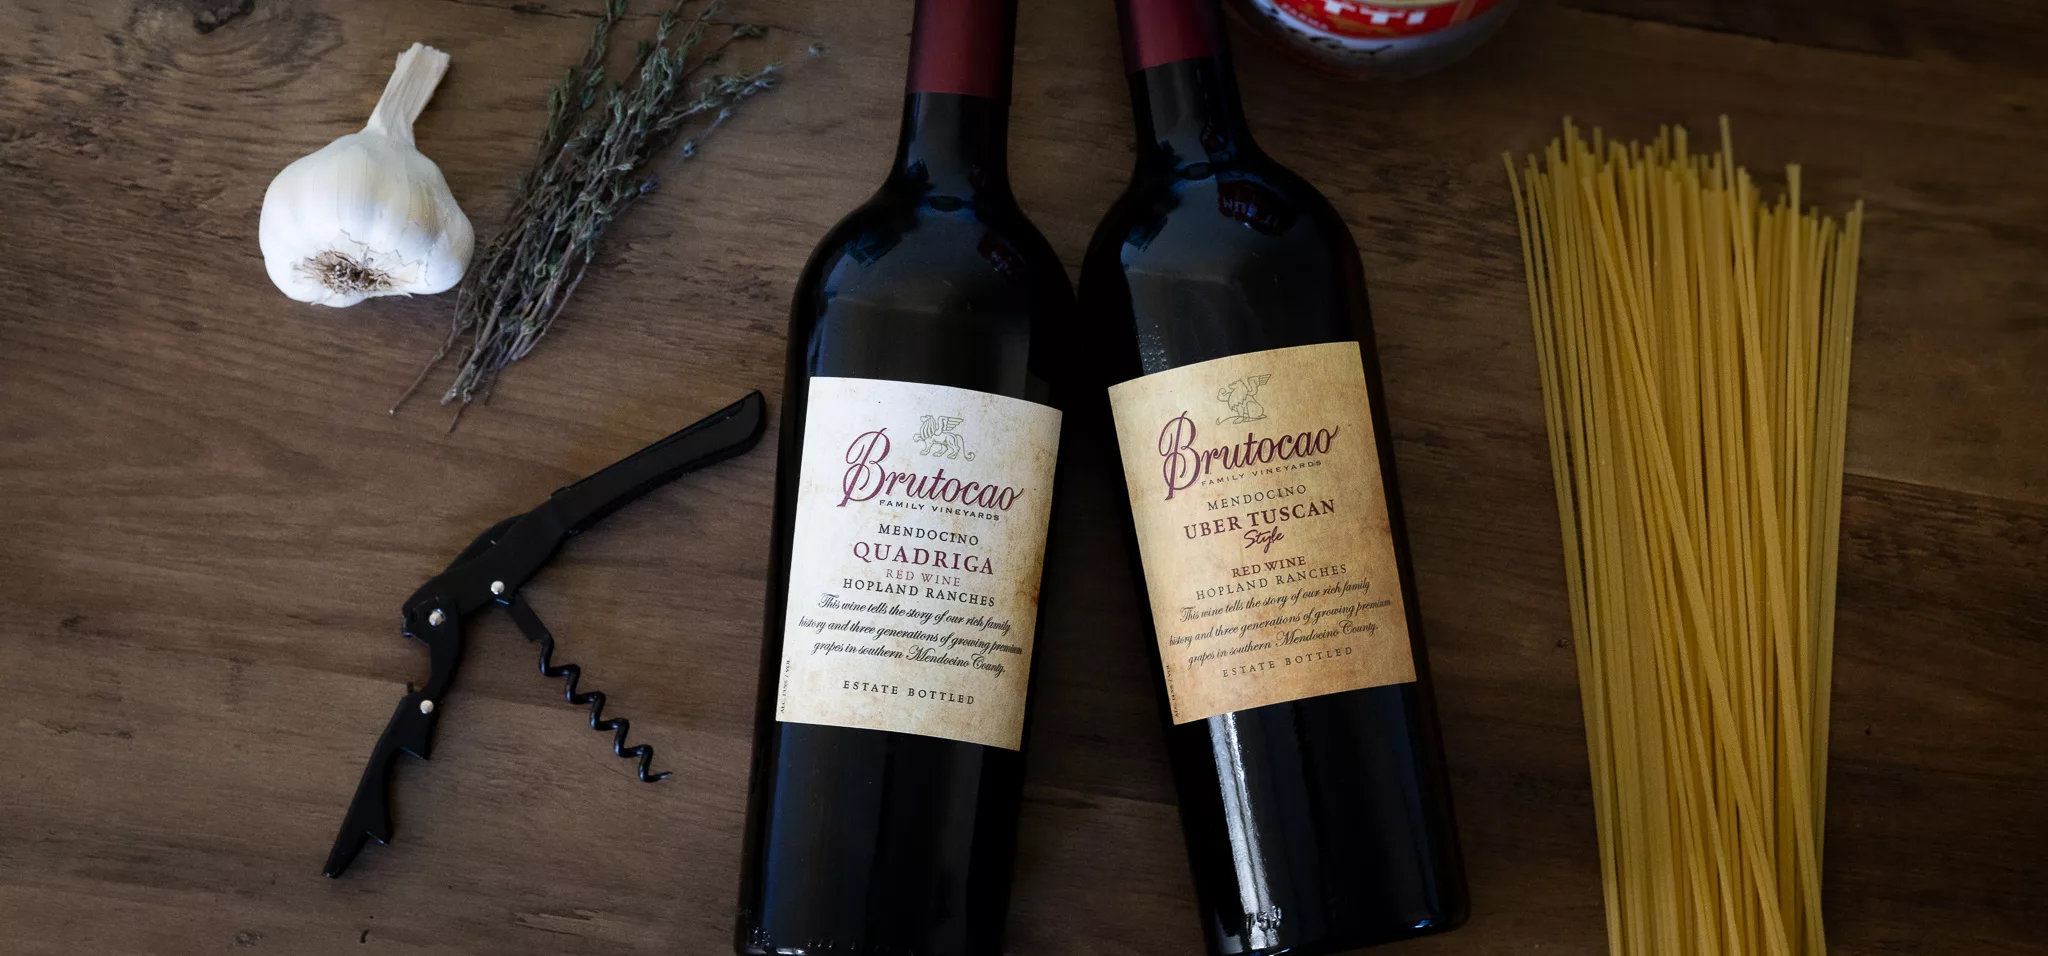 Brutocao Family Vineyards' Quadriga and Uber Tuscan Italian Red Blends